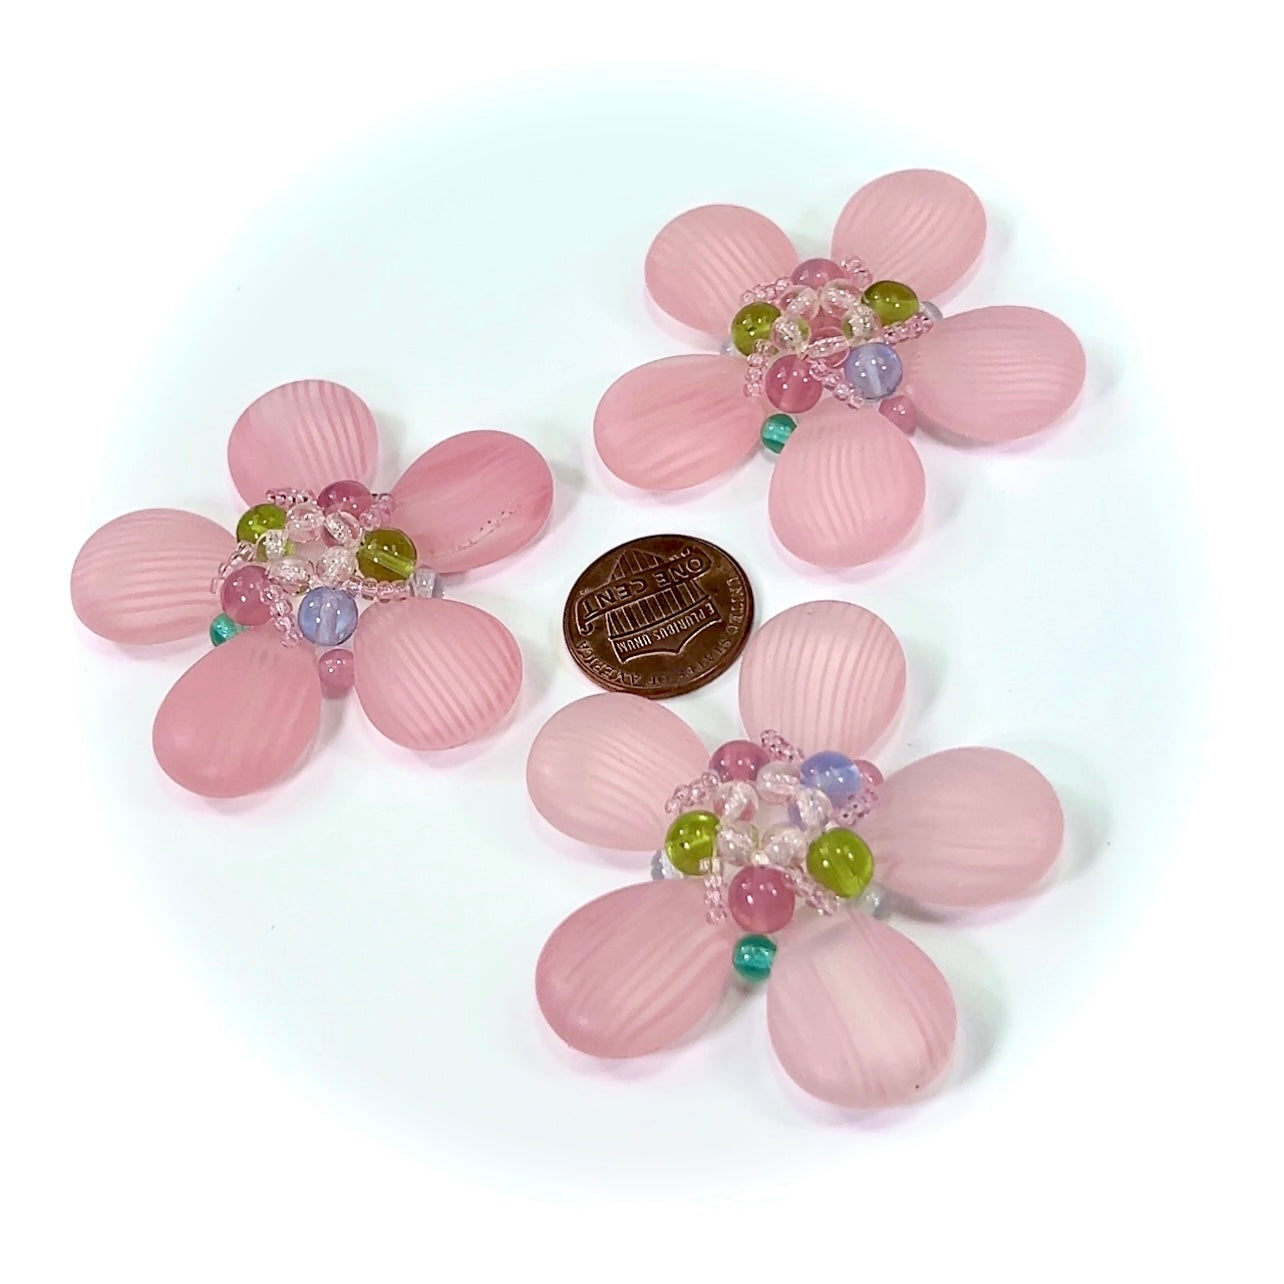 Czech Glass Beads 2 inch Flower Ornament Pink Striped Multi Combination 1 piece CA002